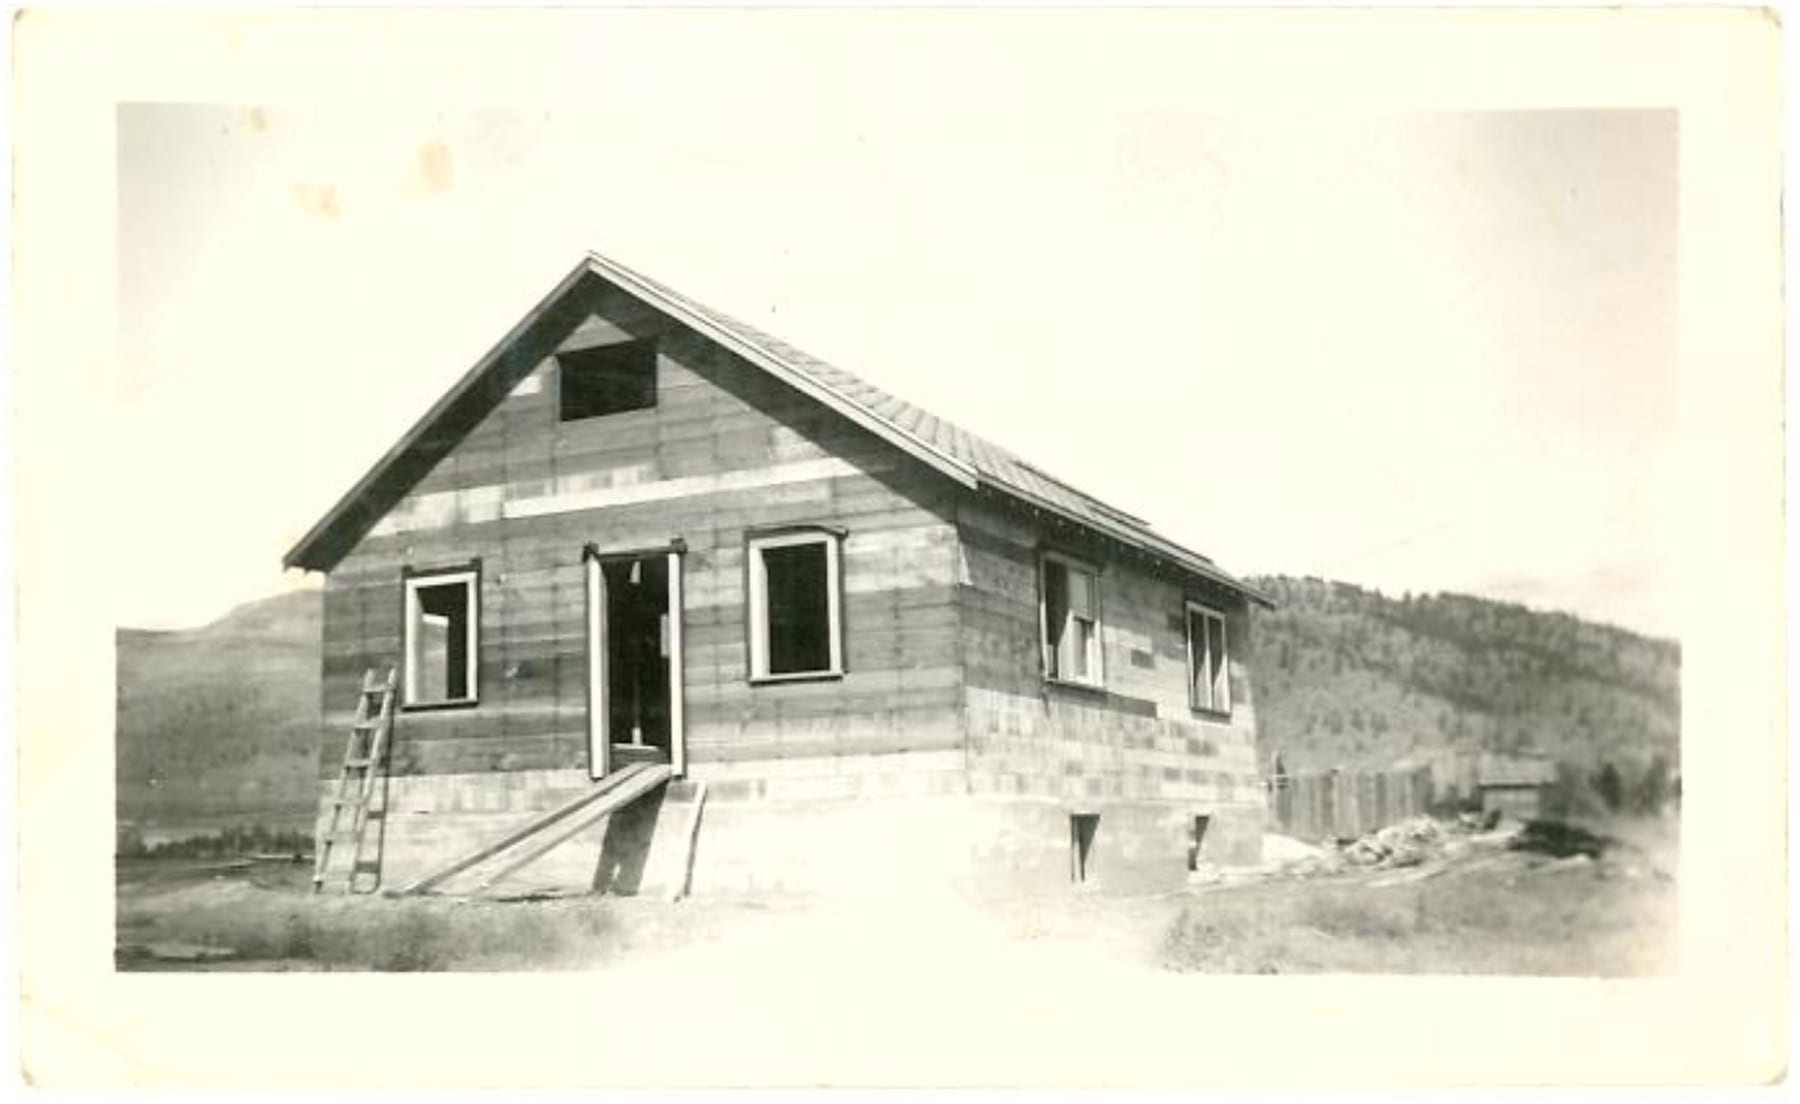 Original farm house on property, now Bron & Sons main office, circa 1950